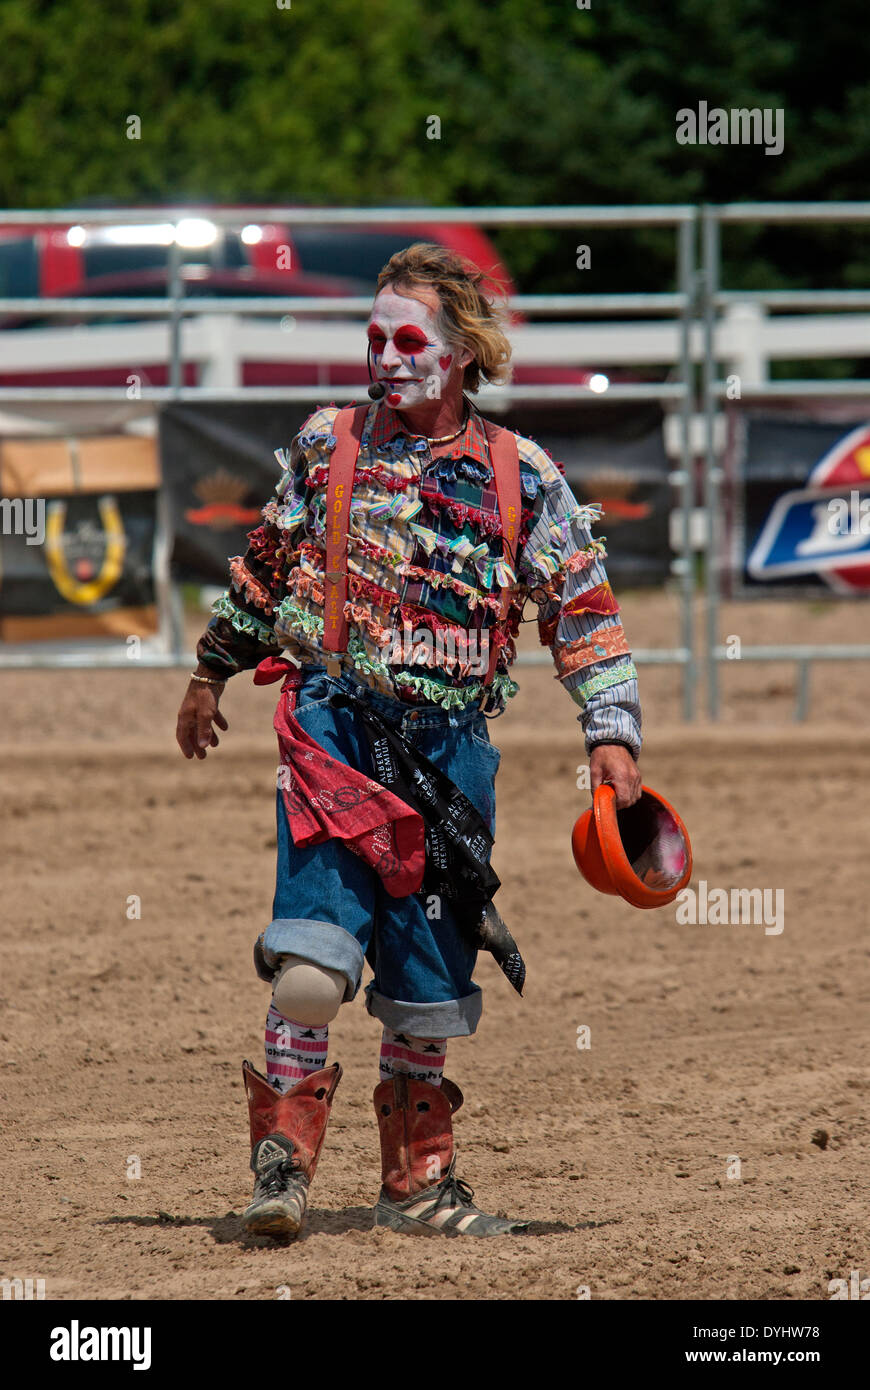 Rodeo clown Stock Photo